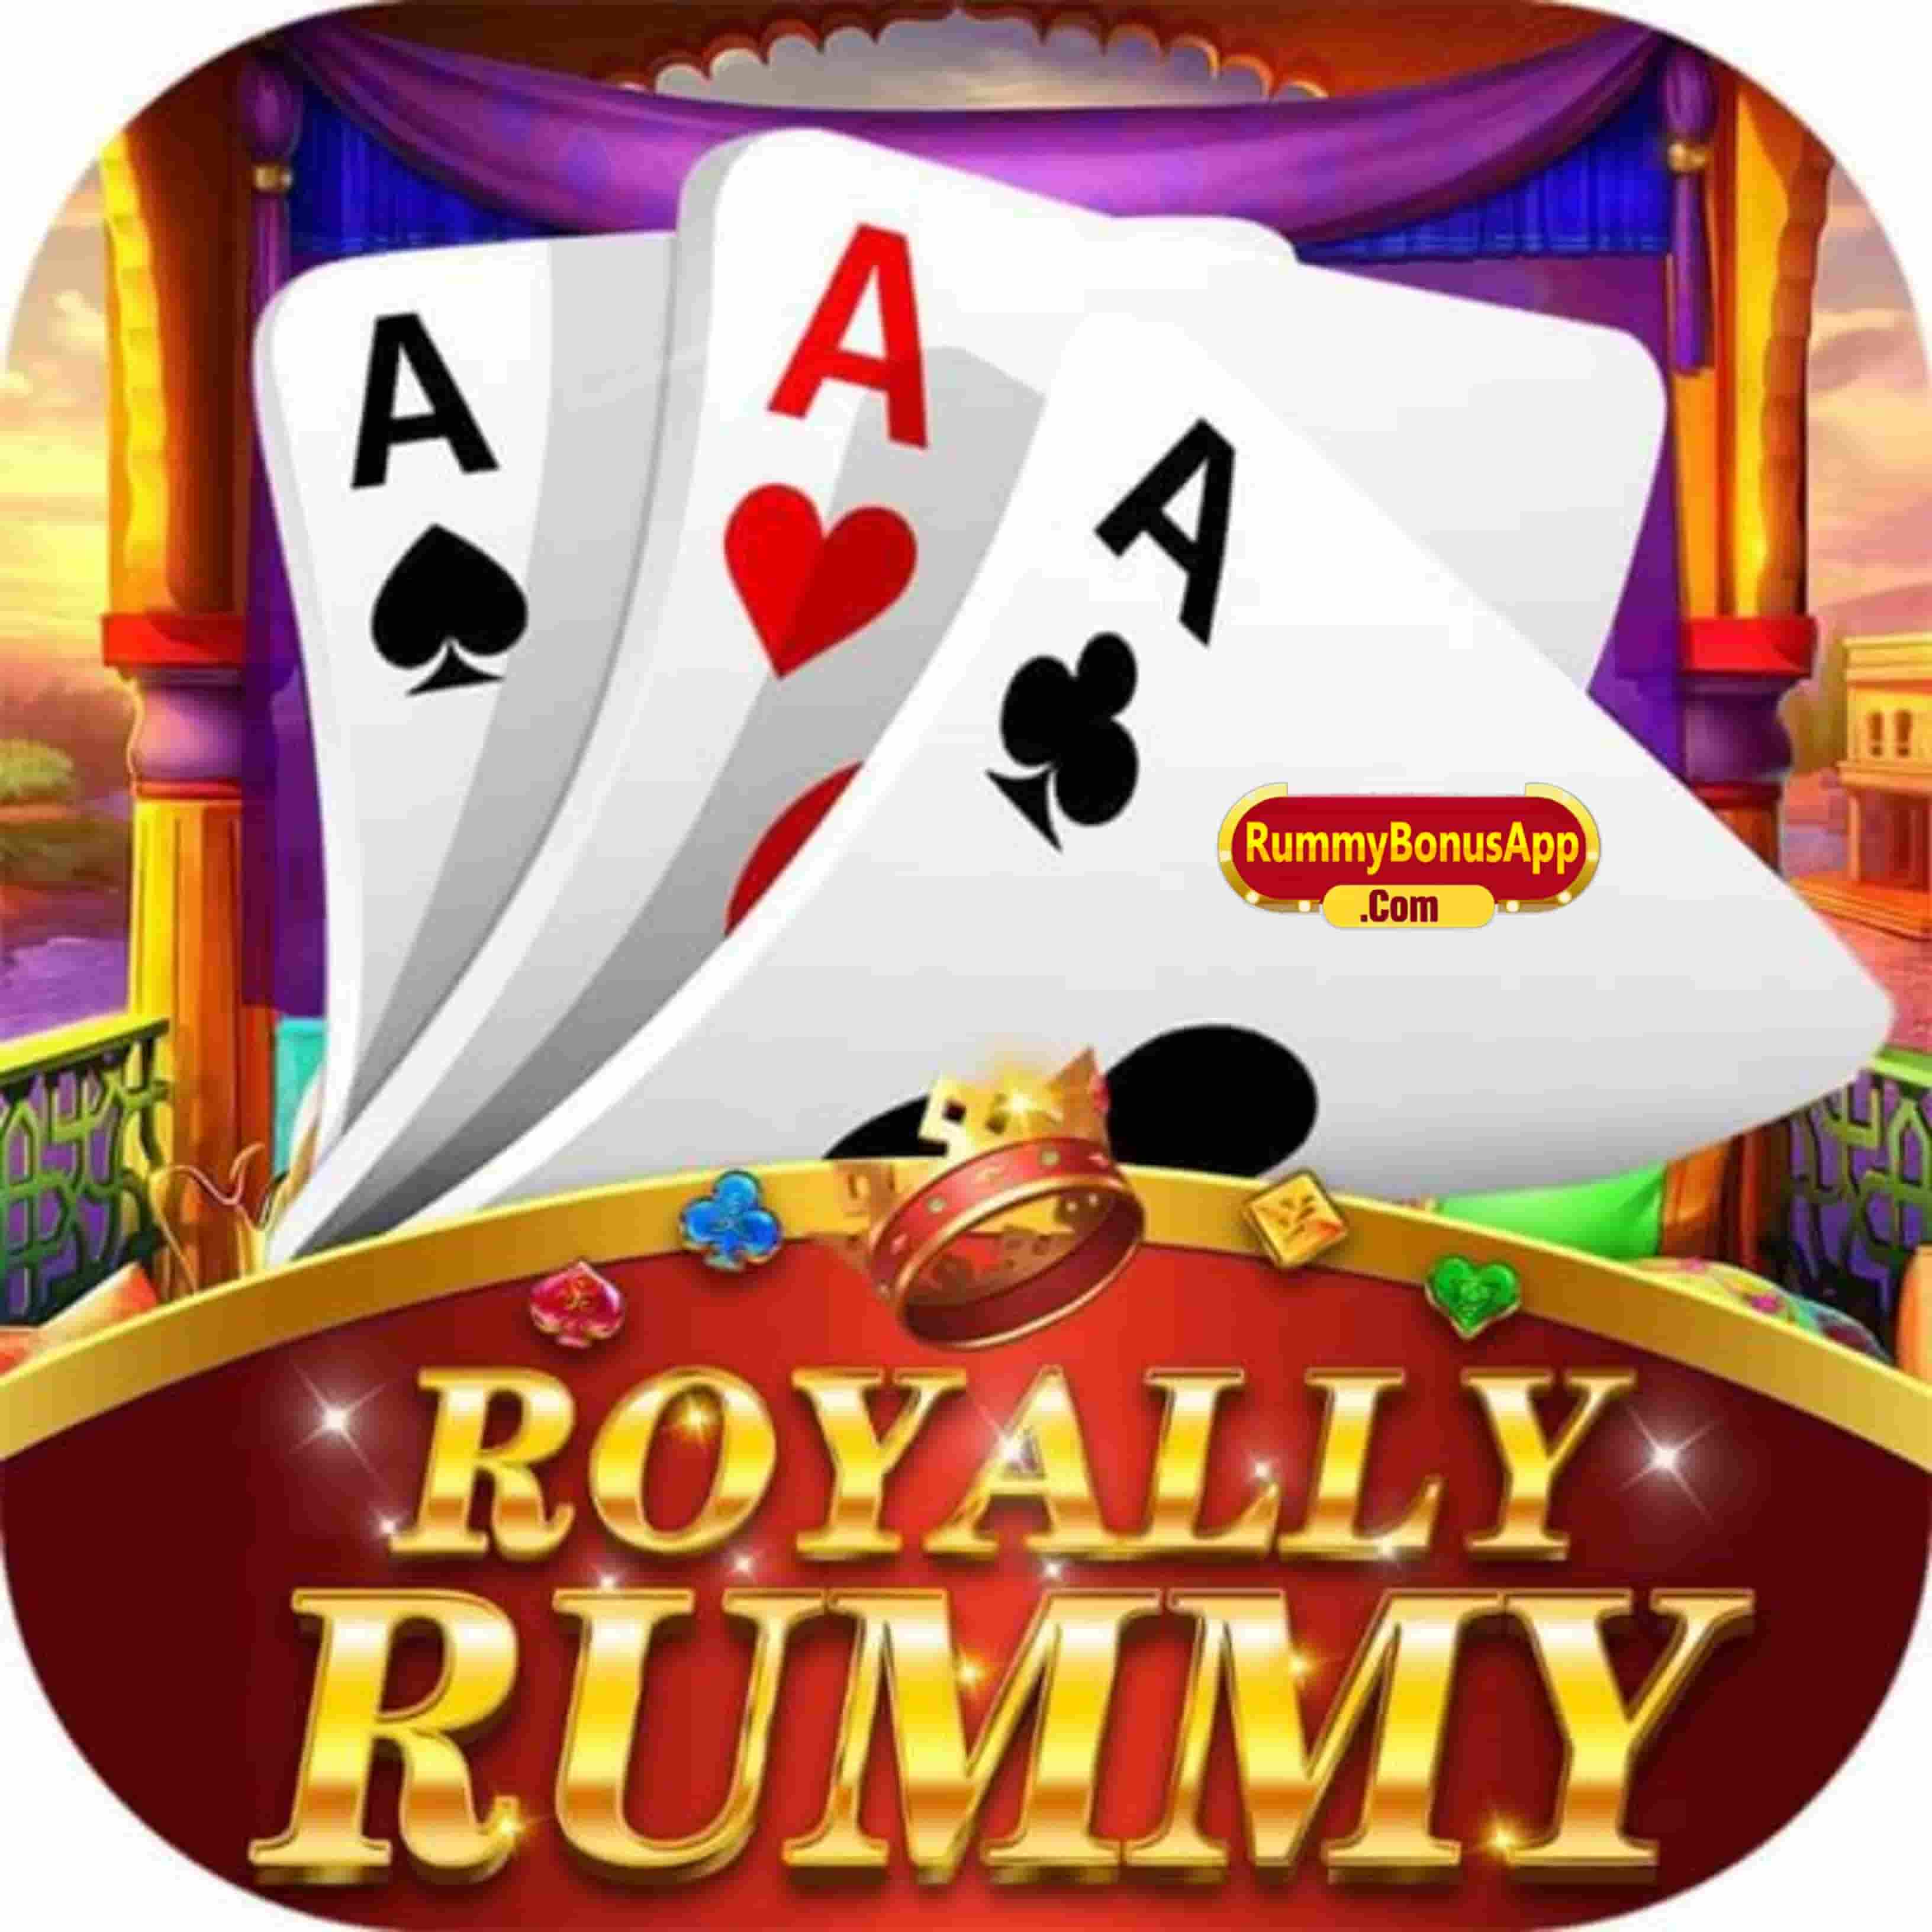 Royally Rummy - RS7SPORTS Rummy